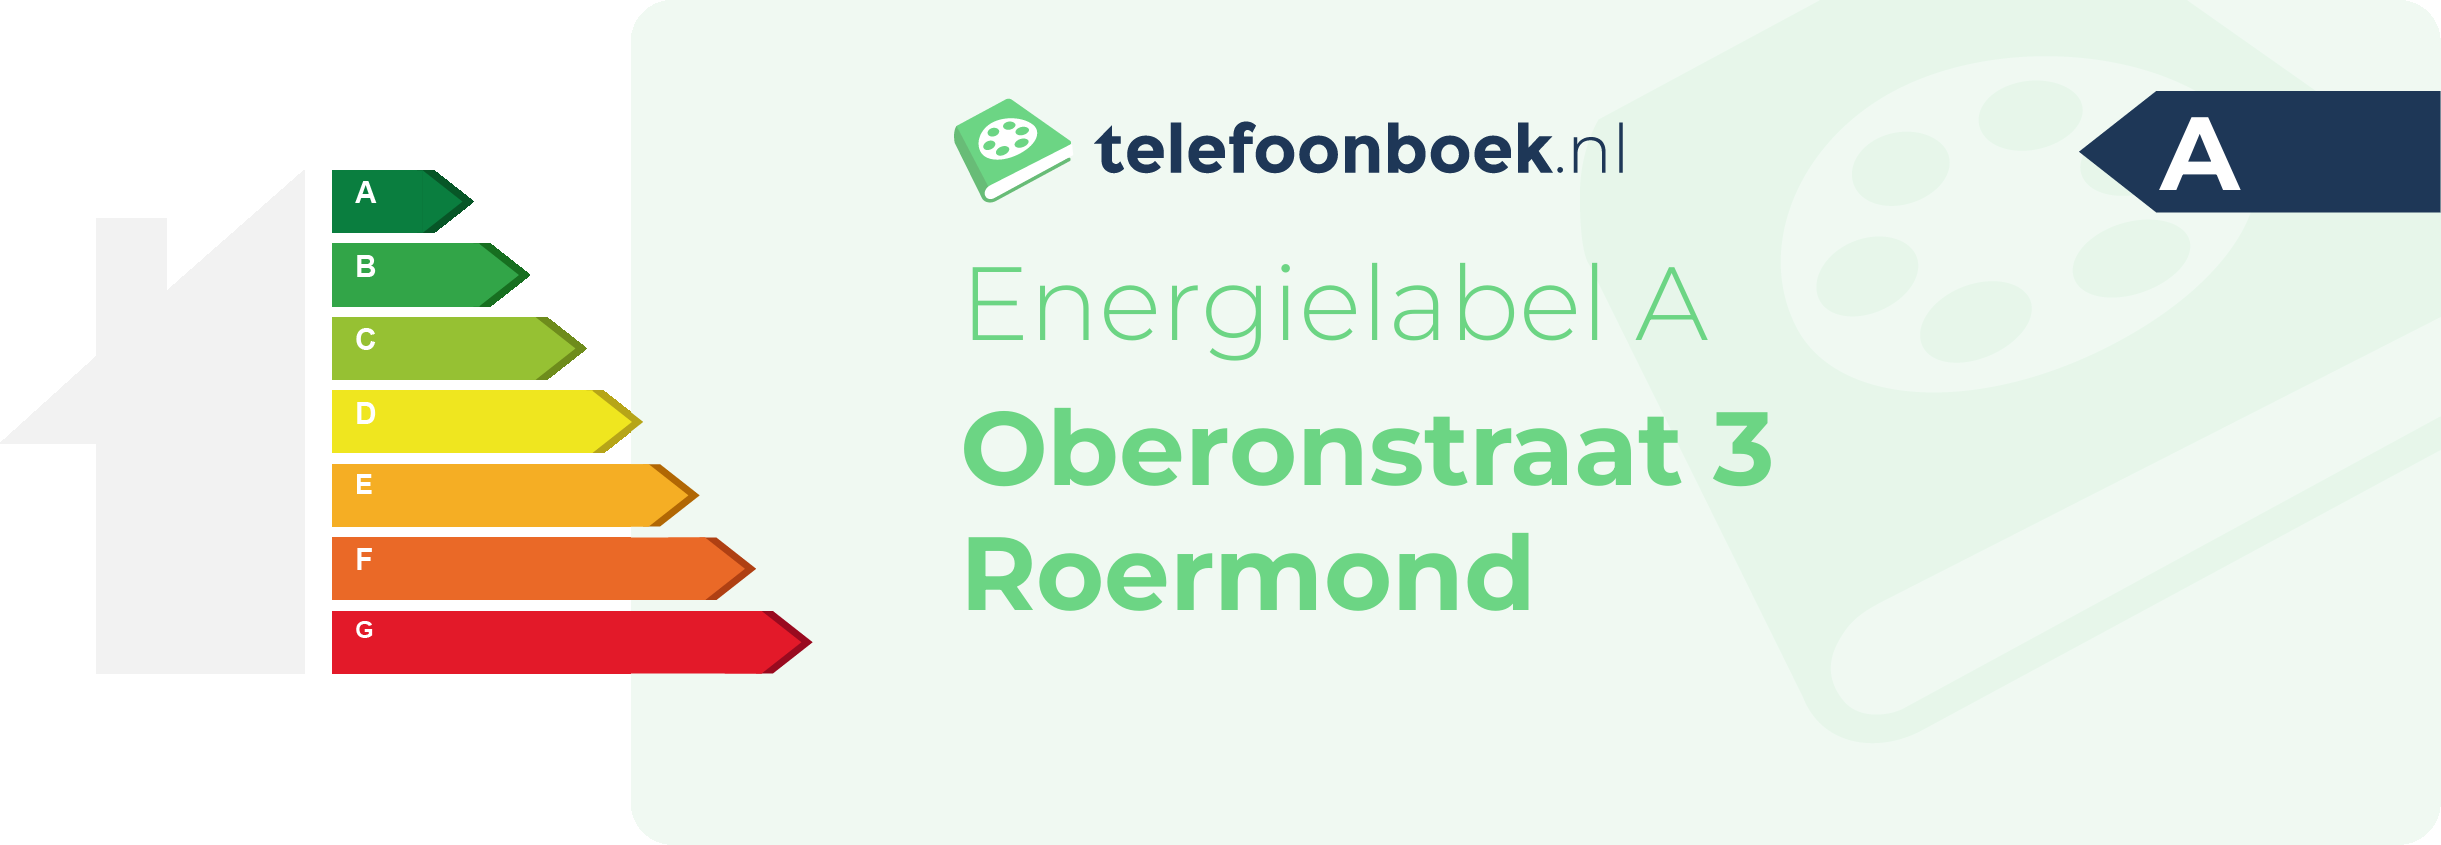 Energielabel Oberonstraat 3 Roermond